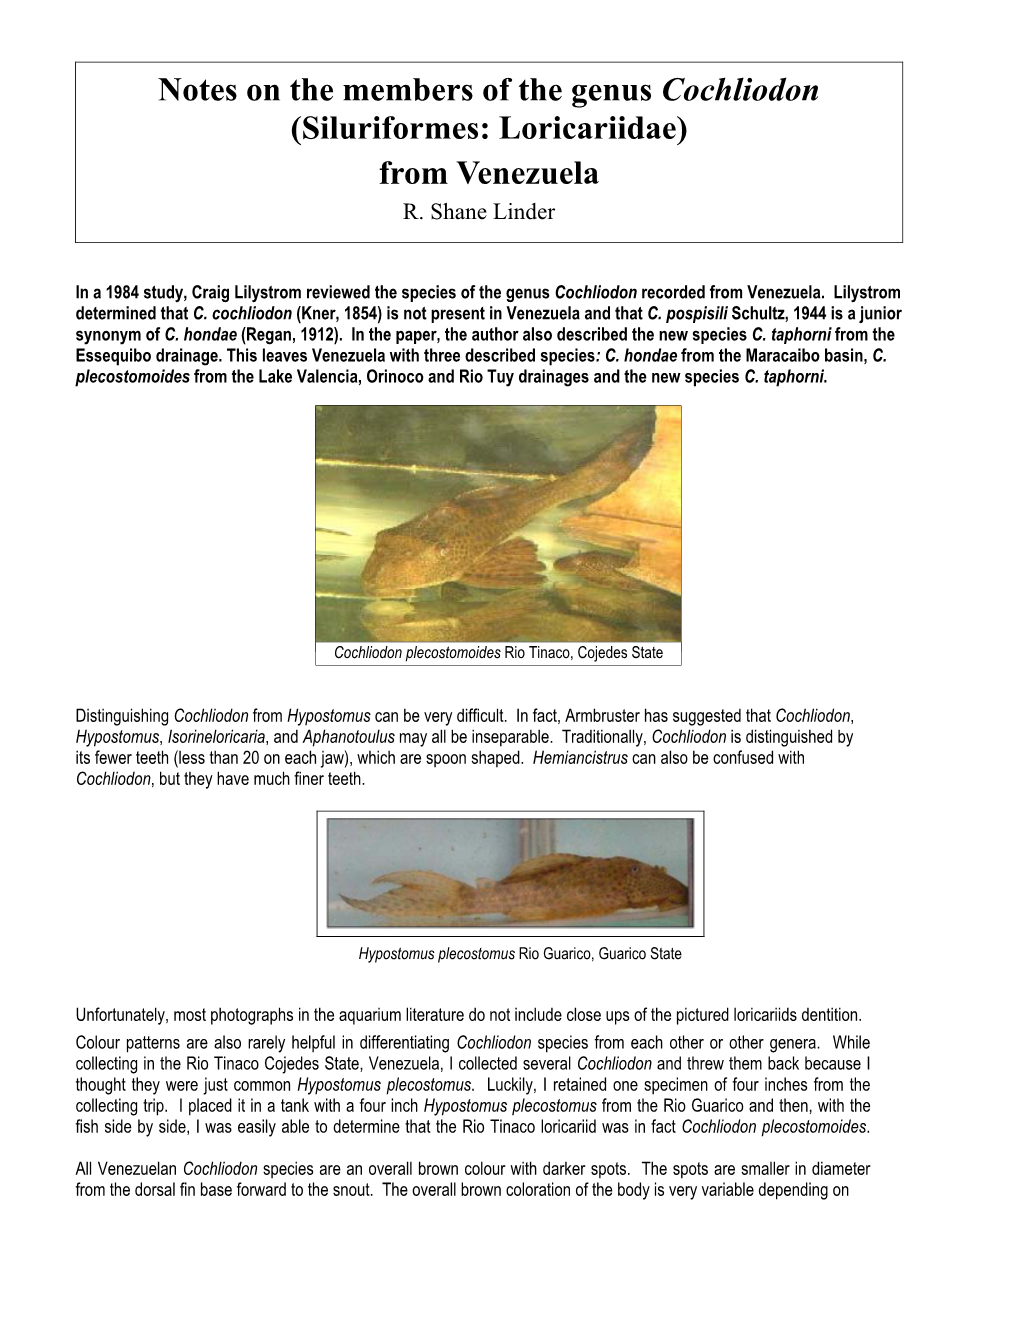 Notes on the Members of the Genus Cochliodon (Siluriformes: Loricariidae) from Venezuela R